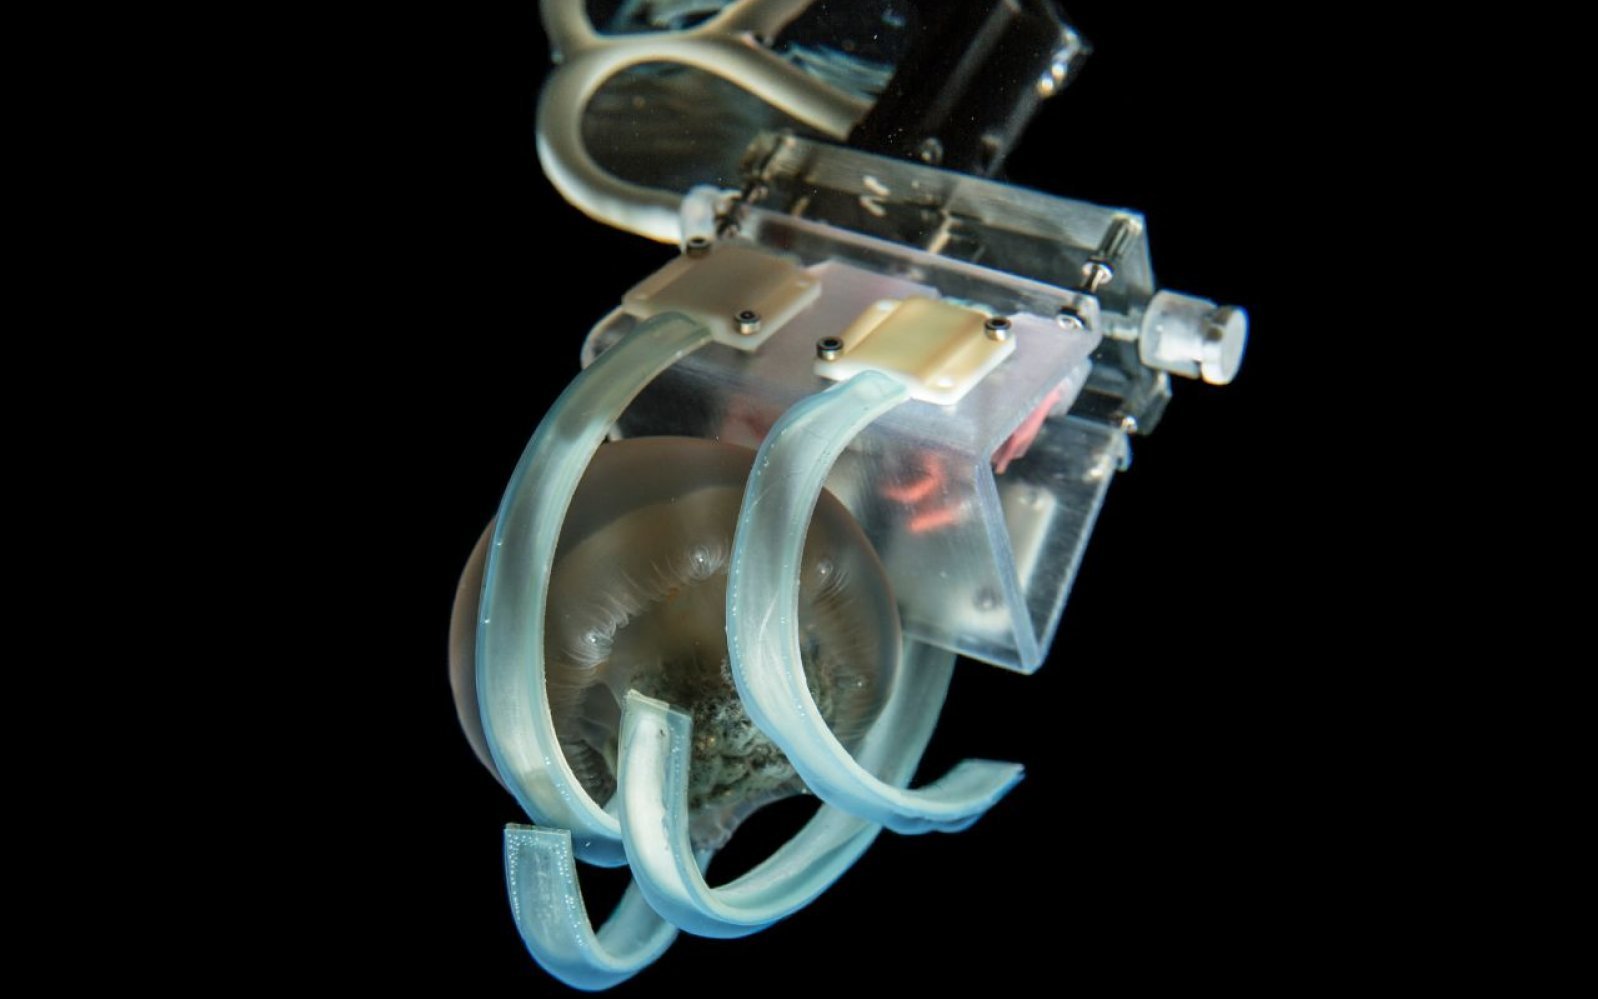 Dedos robóticos blandos y suaves ideales para agarrar medusas